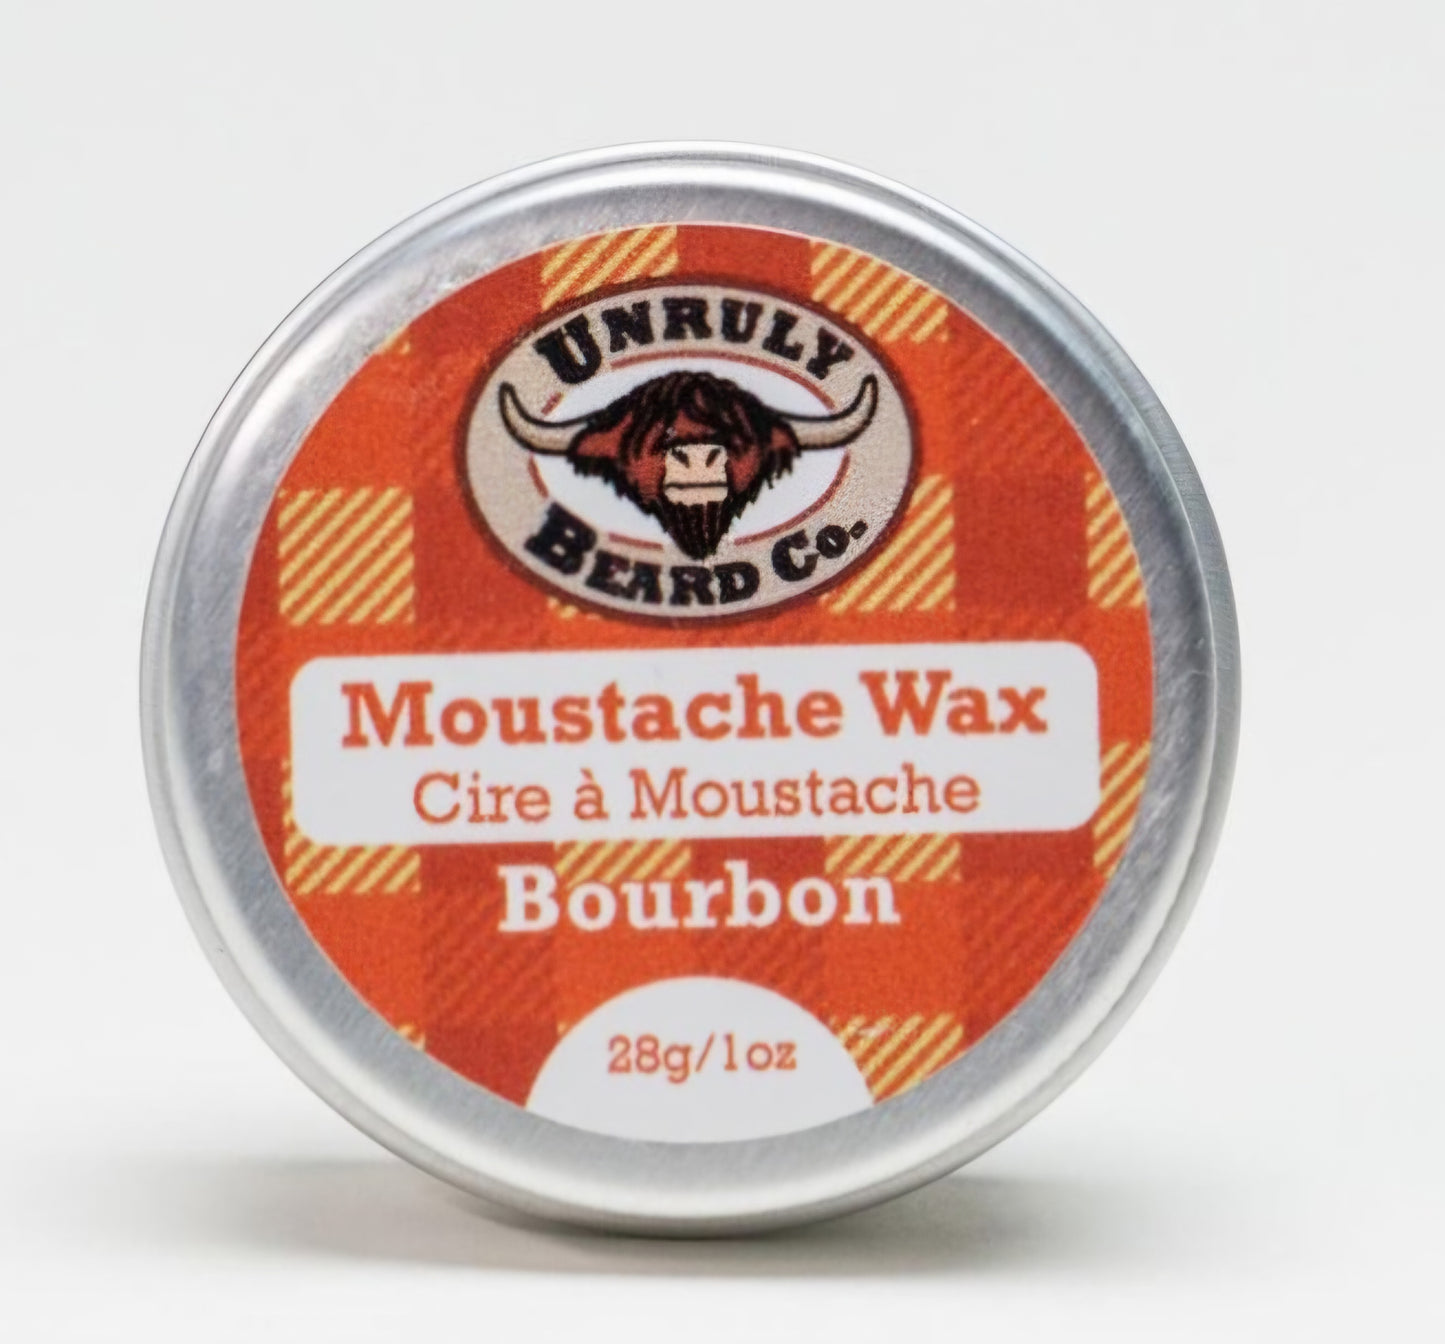 Unruly Beard Bourbon Moustache wax